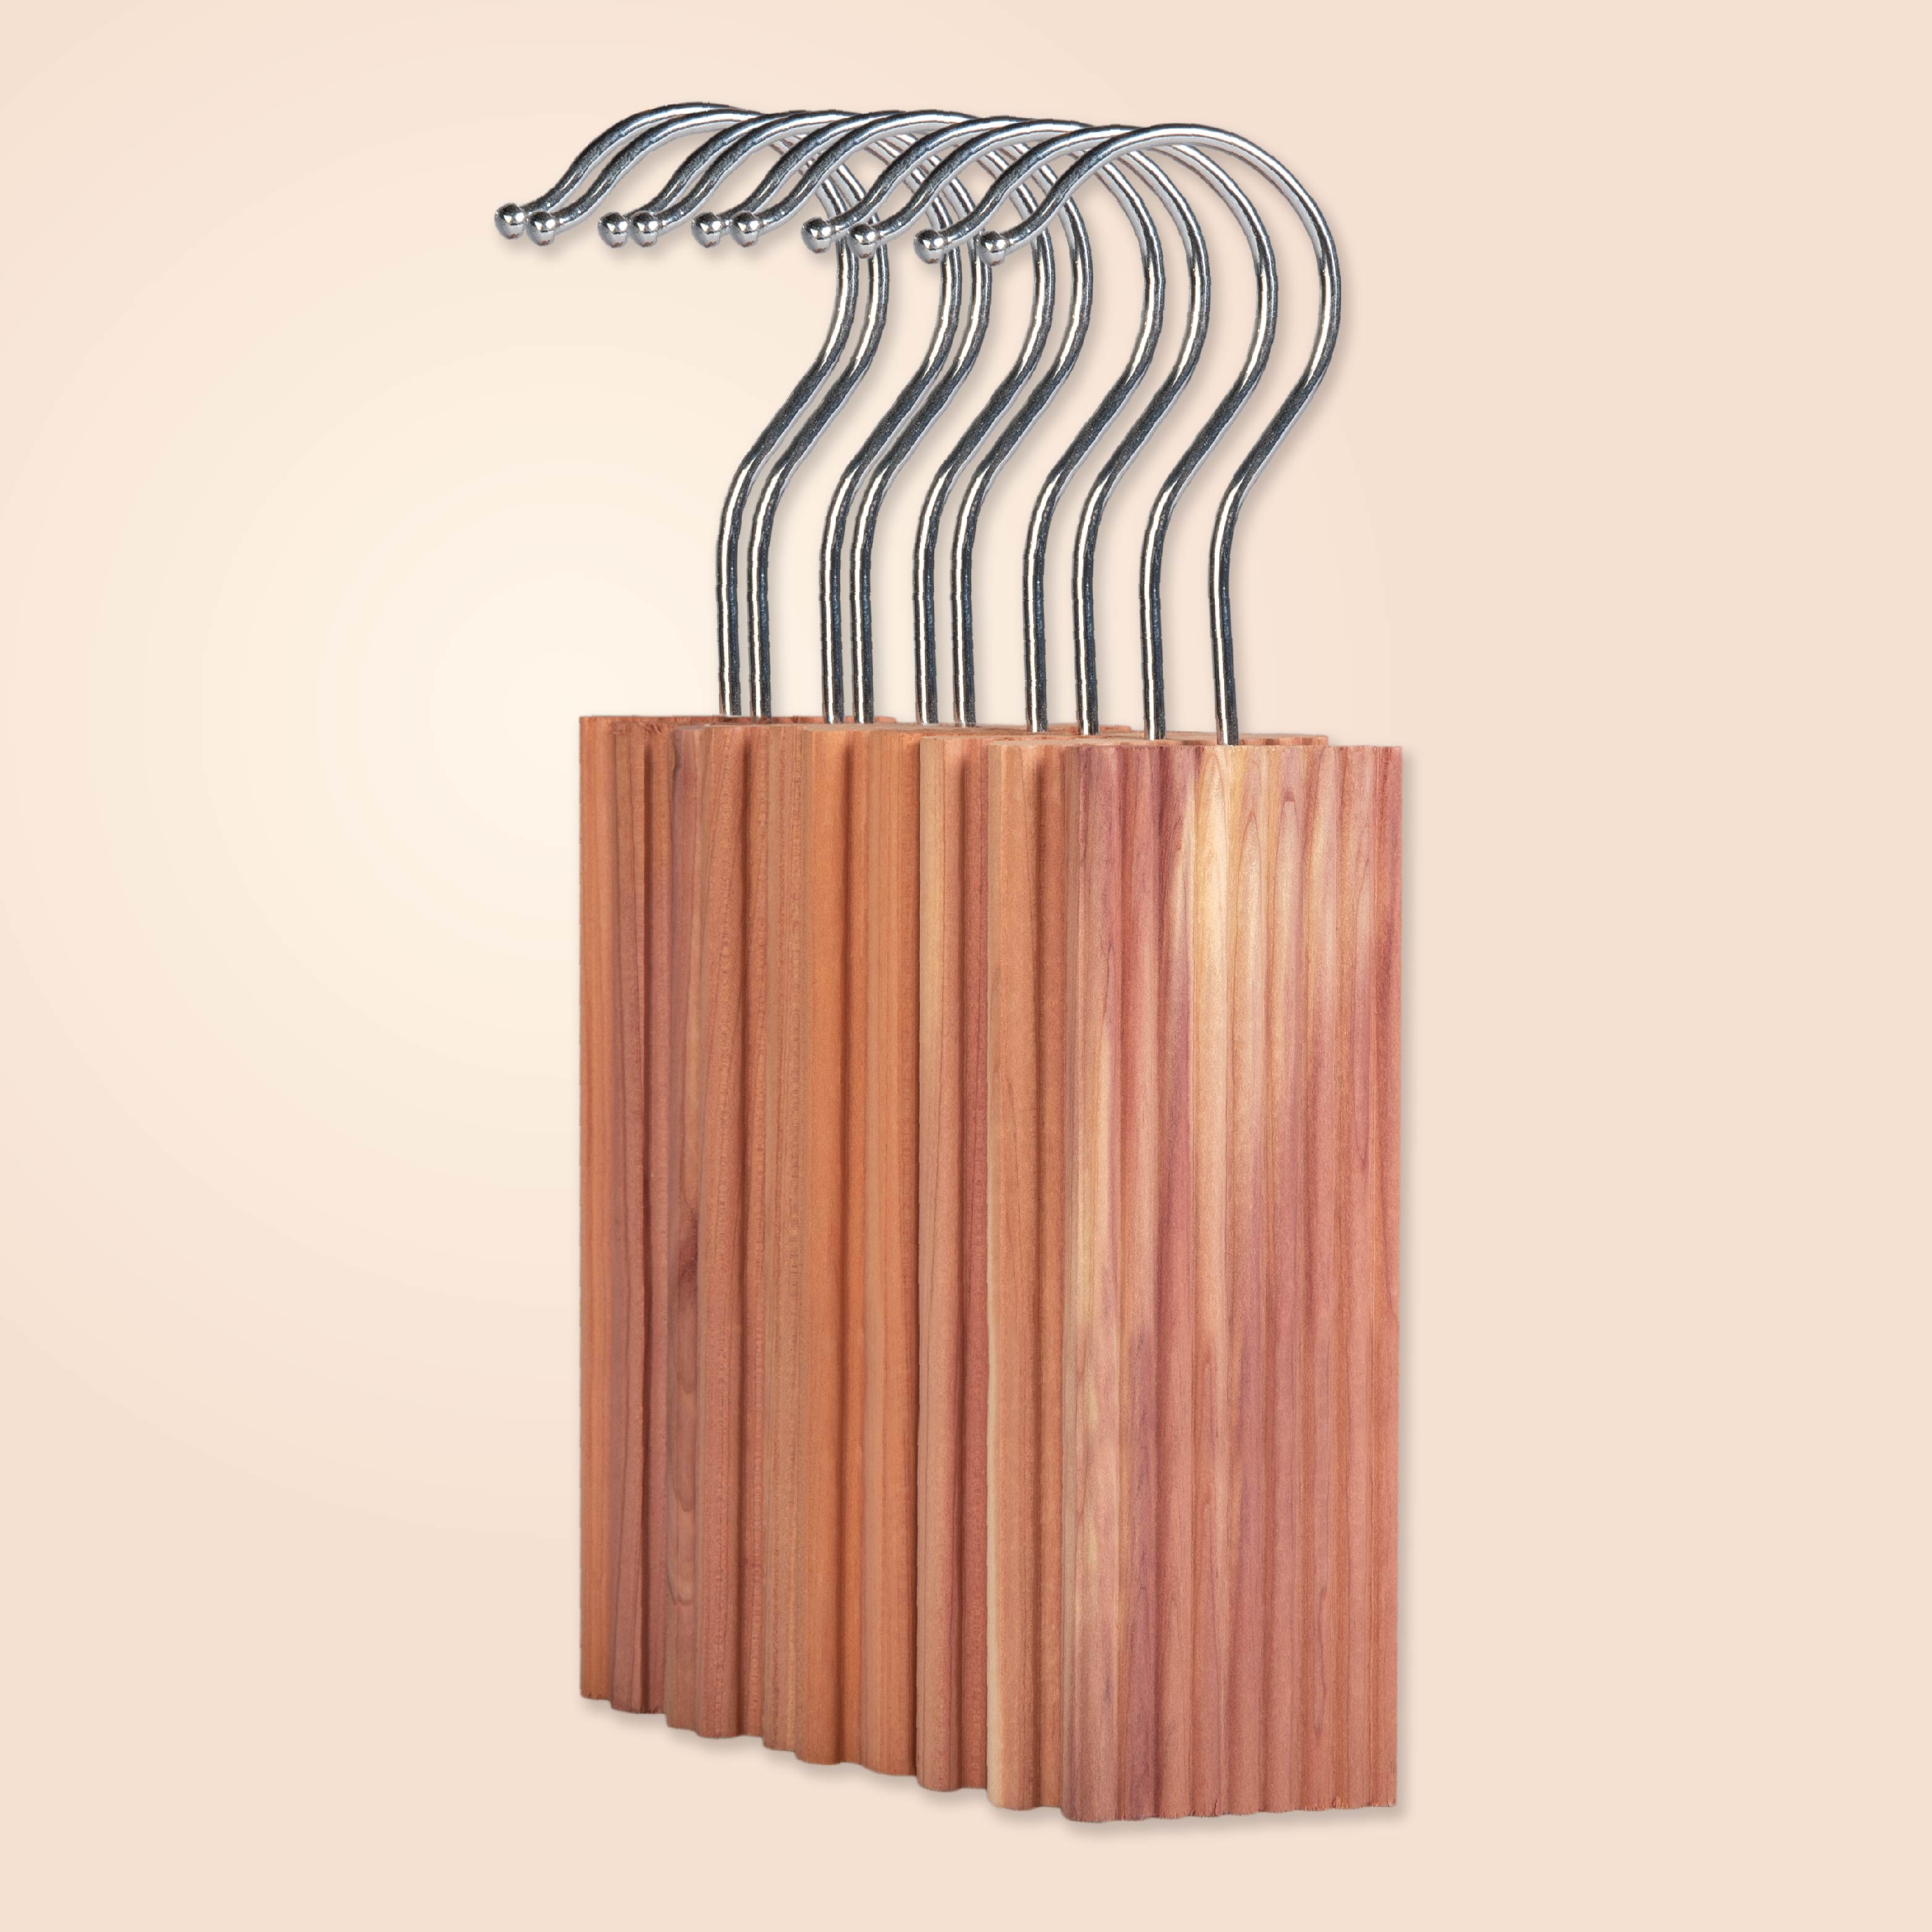 Natural Cedar Air Freshener Hang-Ups | Cedar Block Hangups for Wardrobe